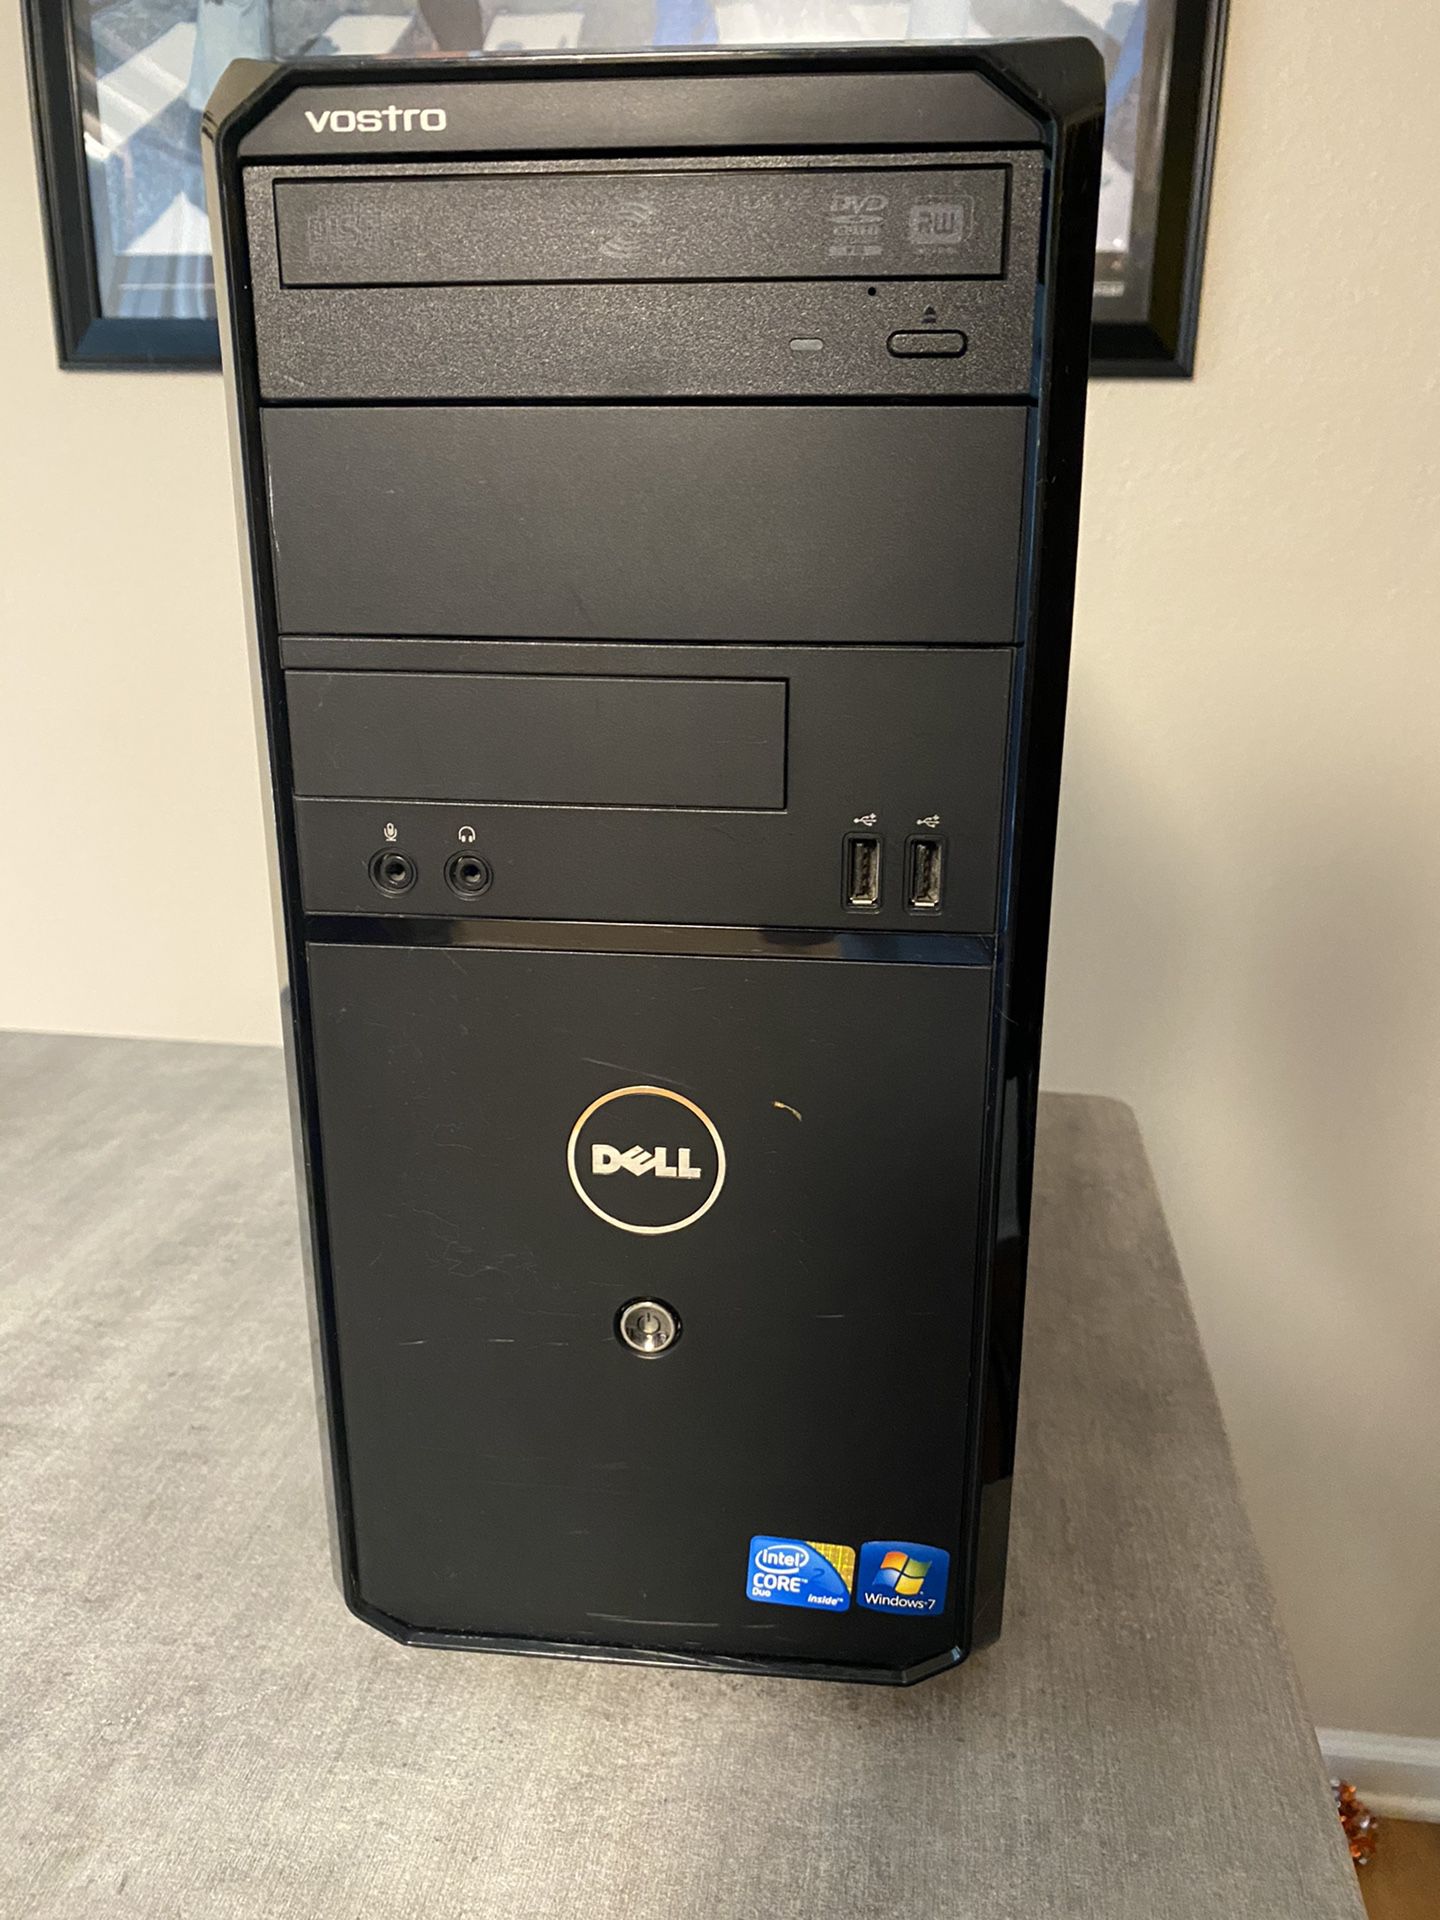 Dell Desktop Computer $55 OBO